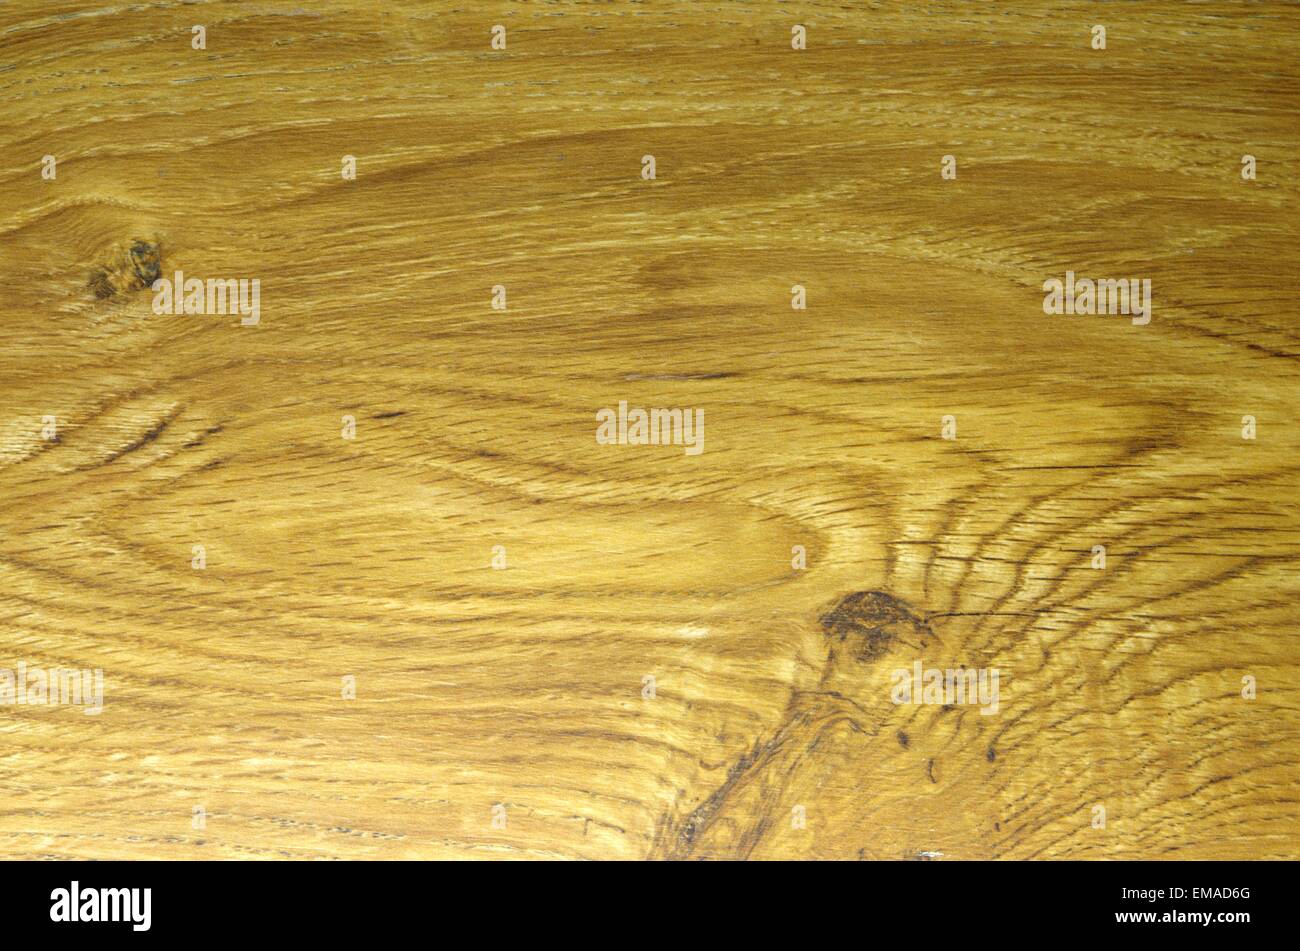 Holz Eiche Textur mit Korn Stockfoto